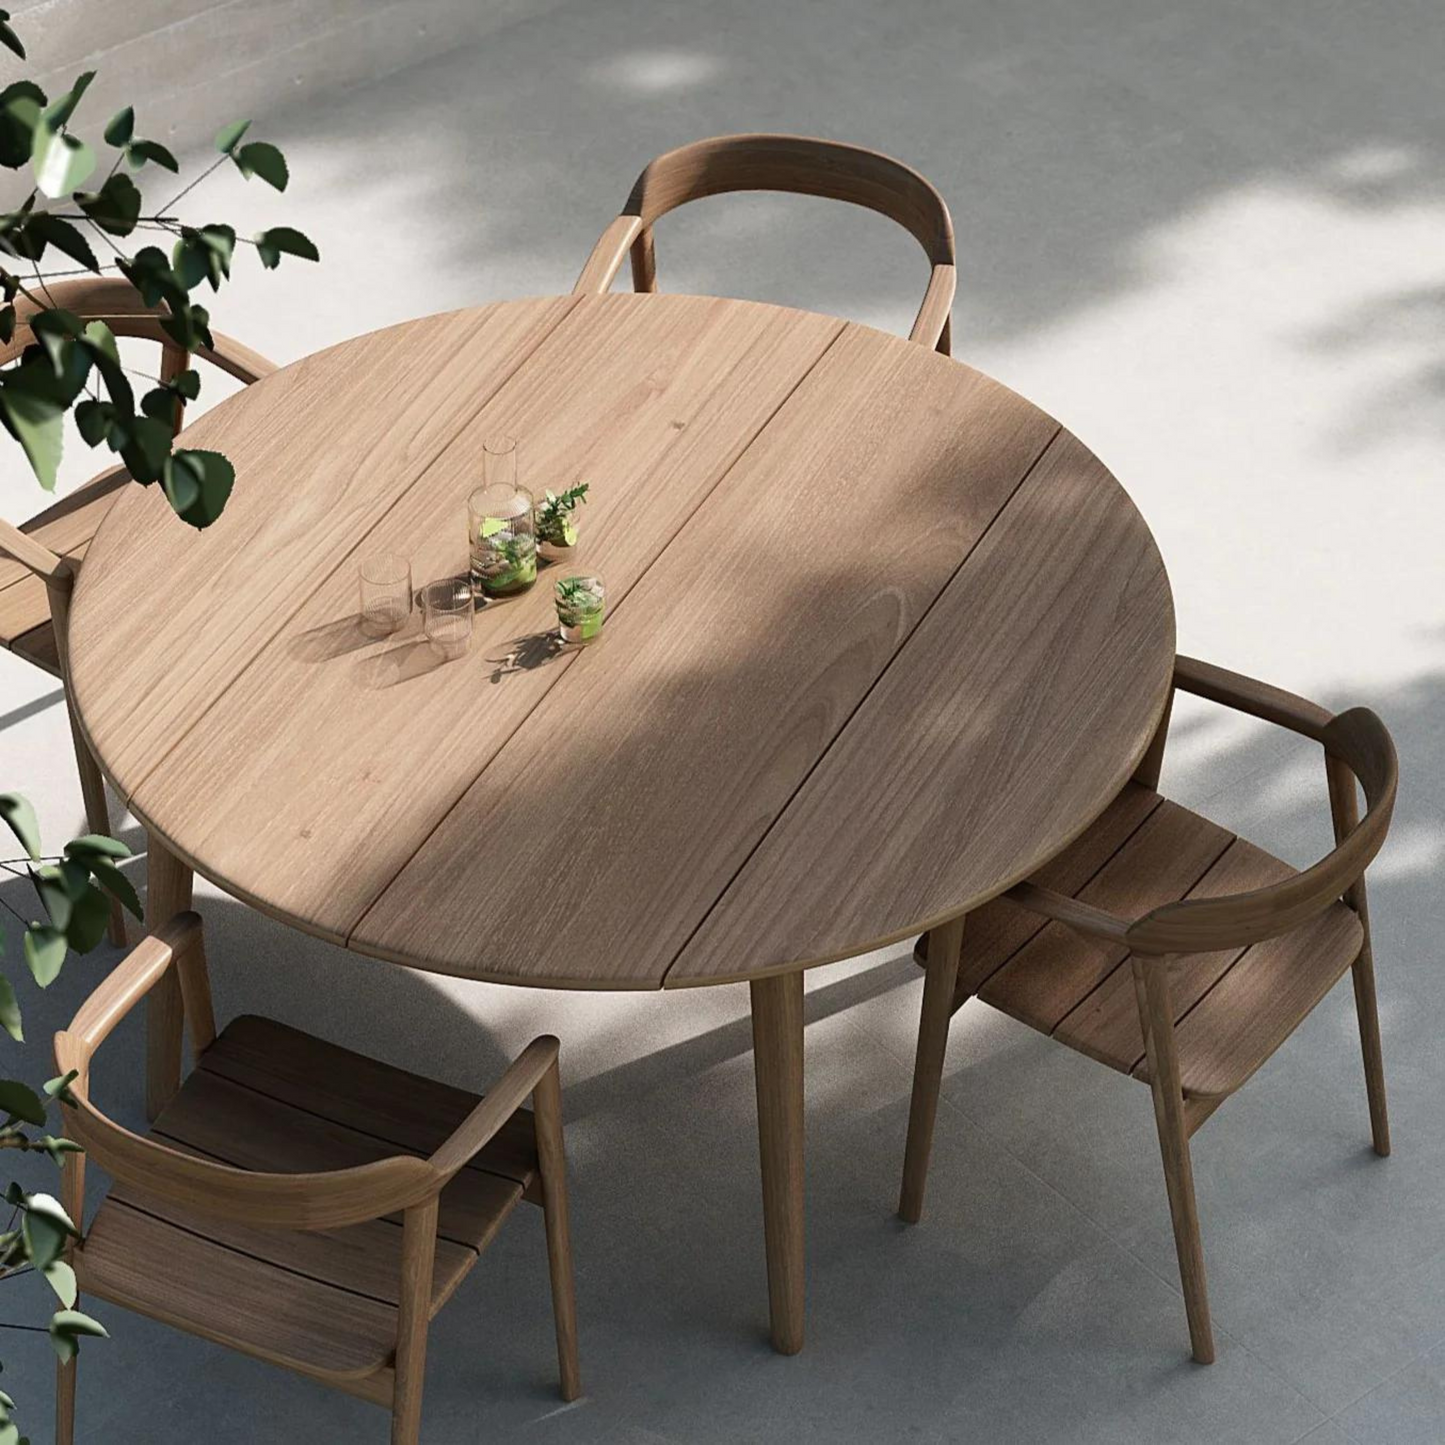 Grasshopper Outdoor Round Dining Table 120cm - Teak